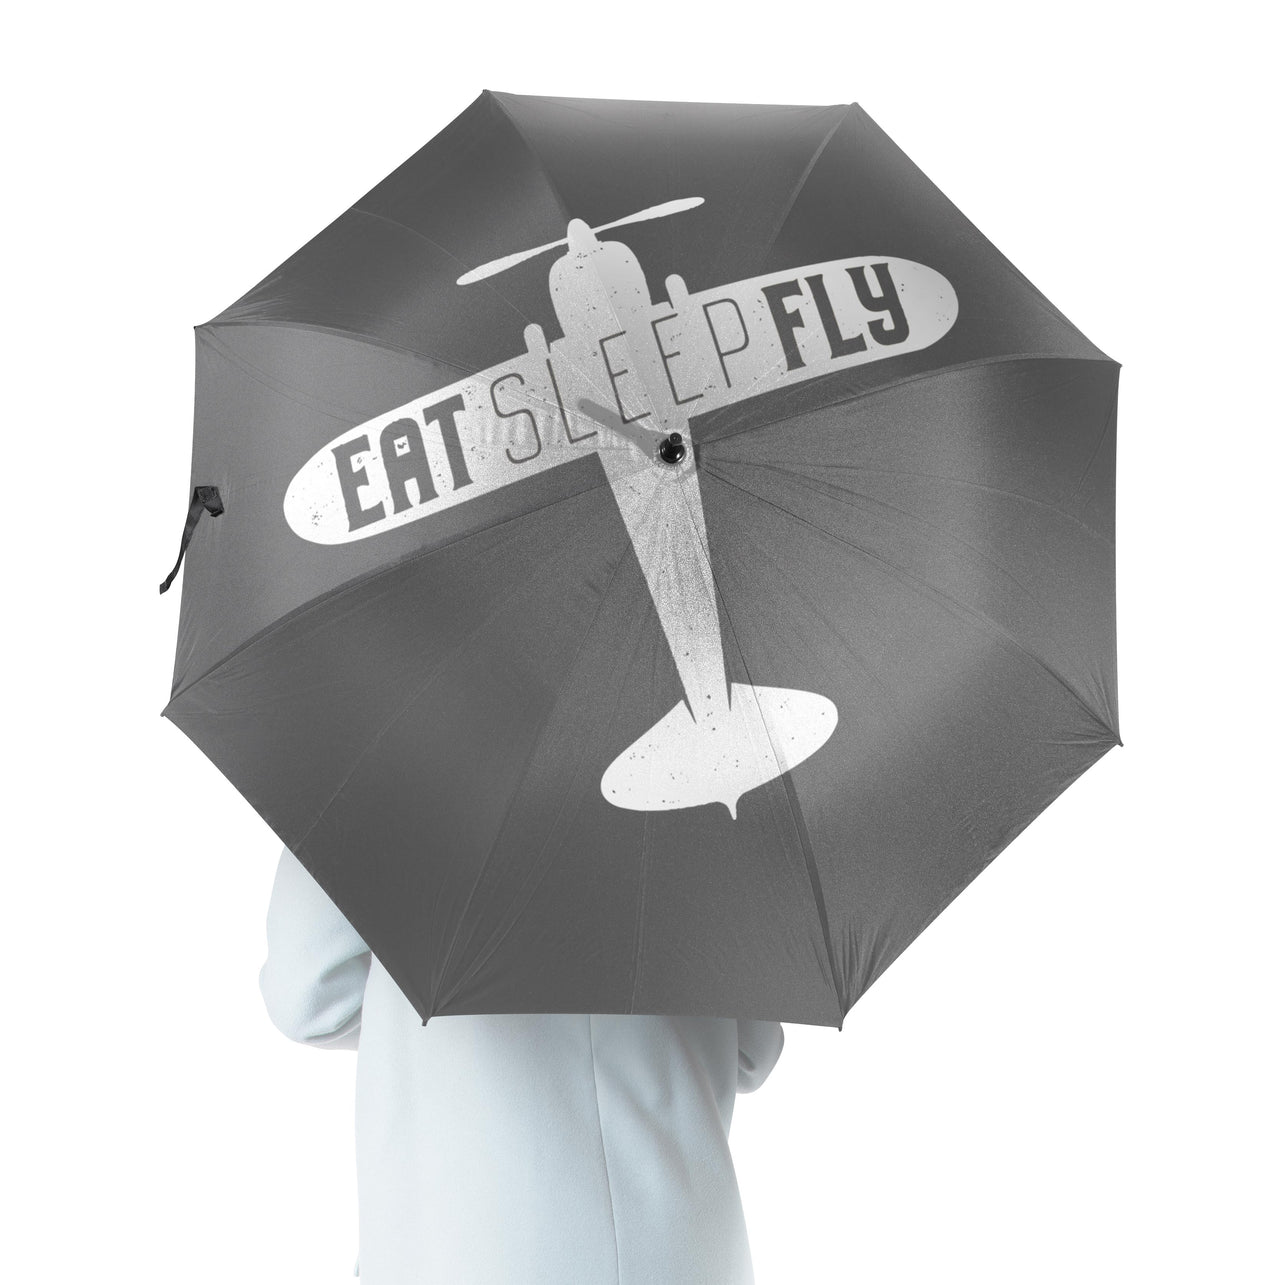 Eat Sleep Fly & Propeller Designed Umbrella